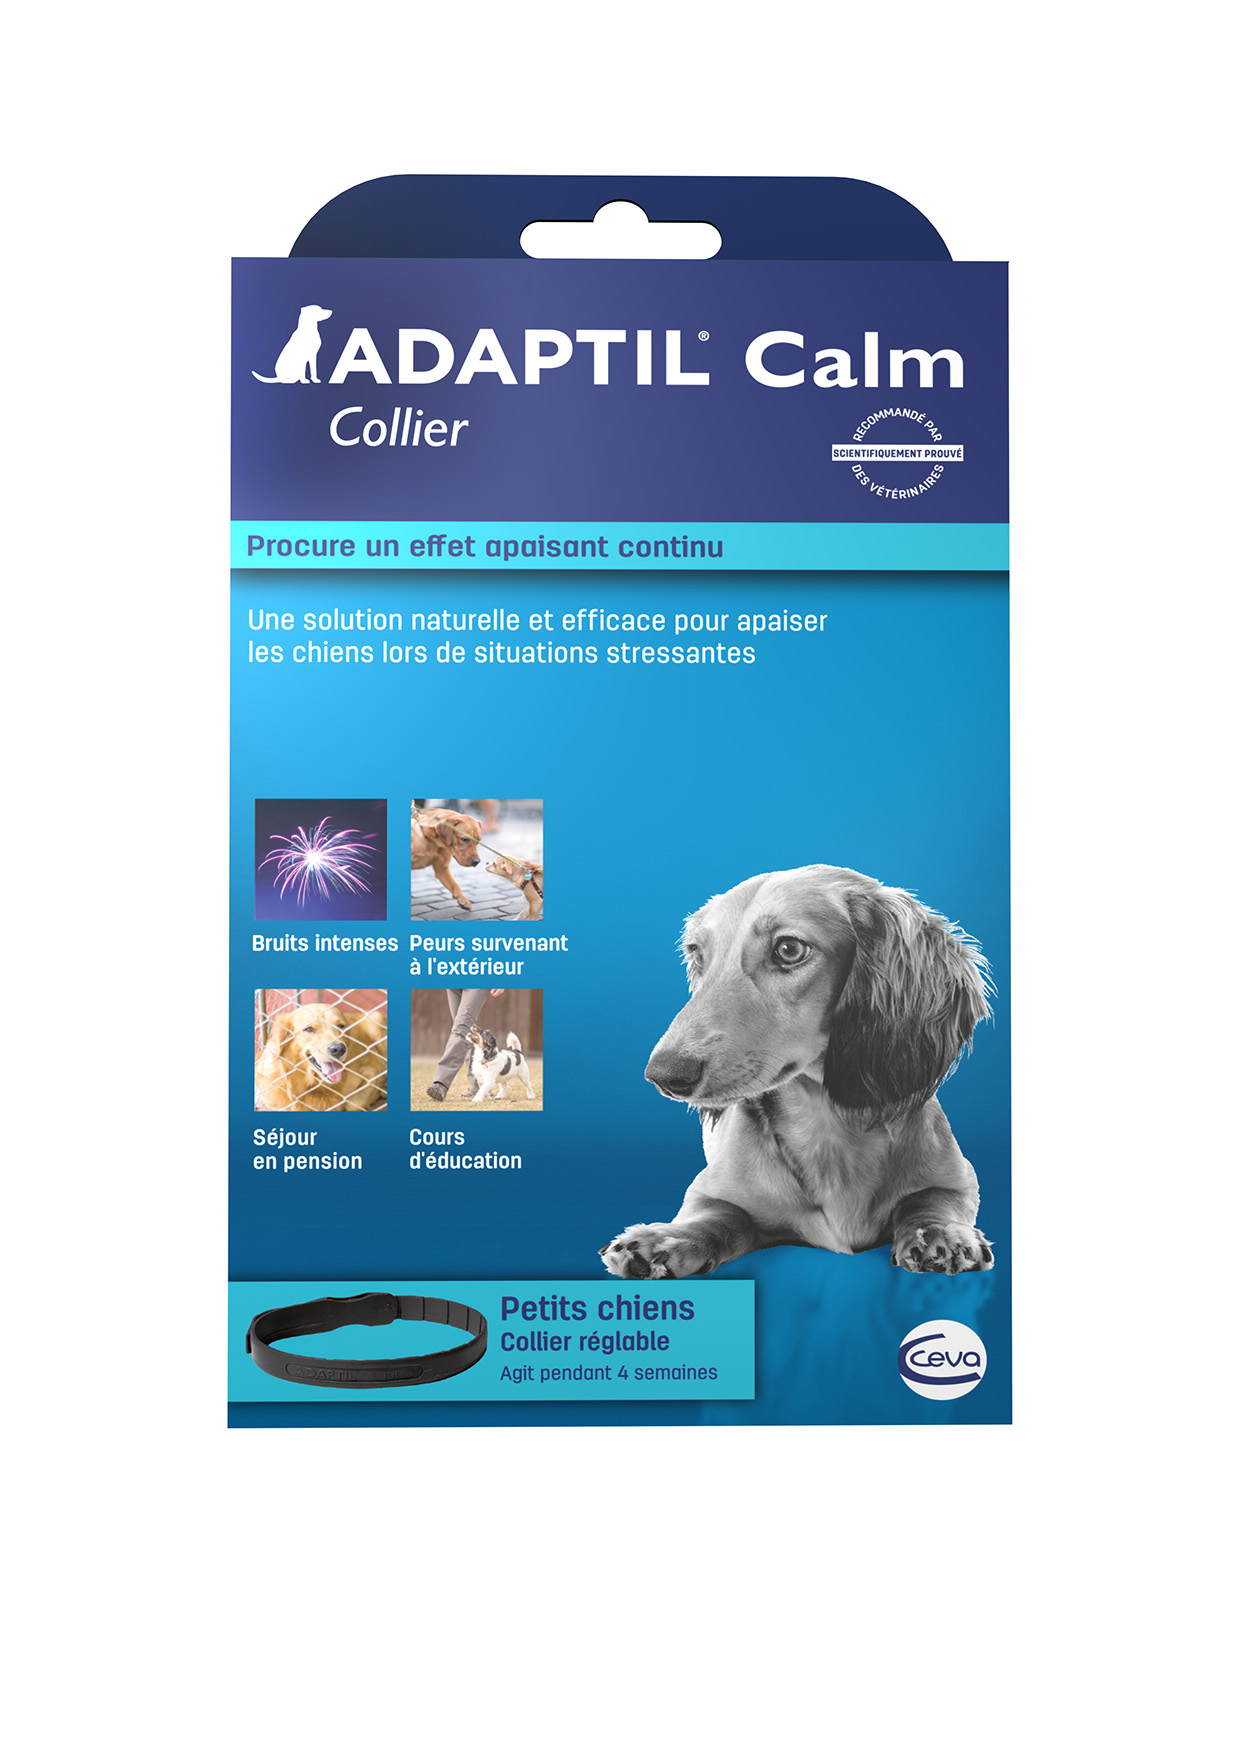 Adaptil Calm Collare anti-stress per cani